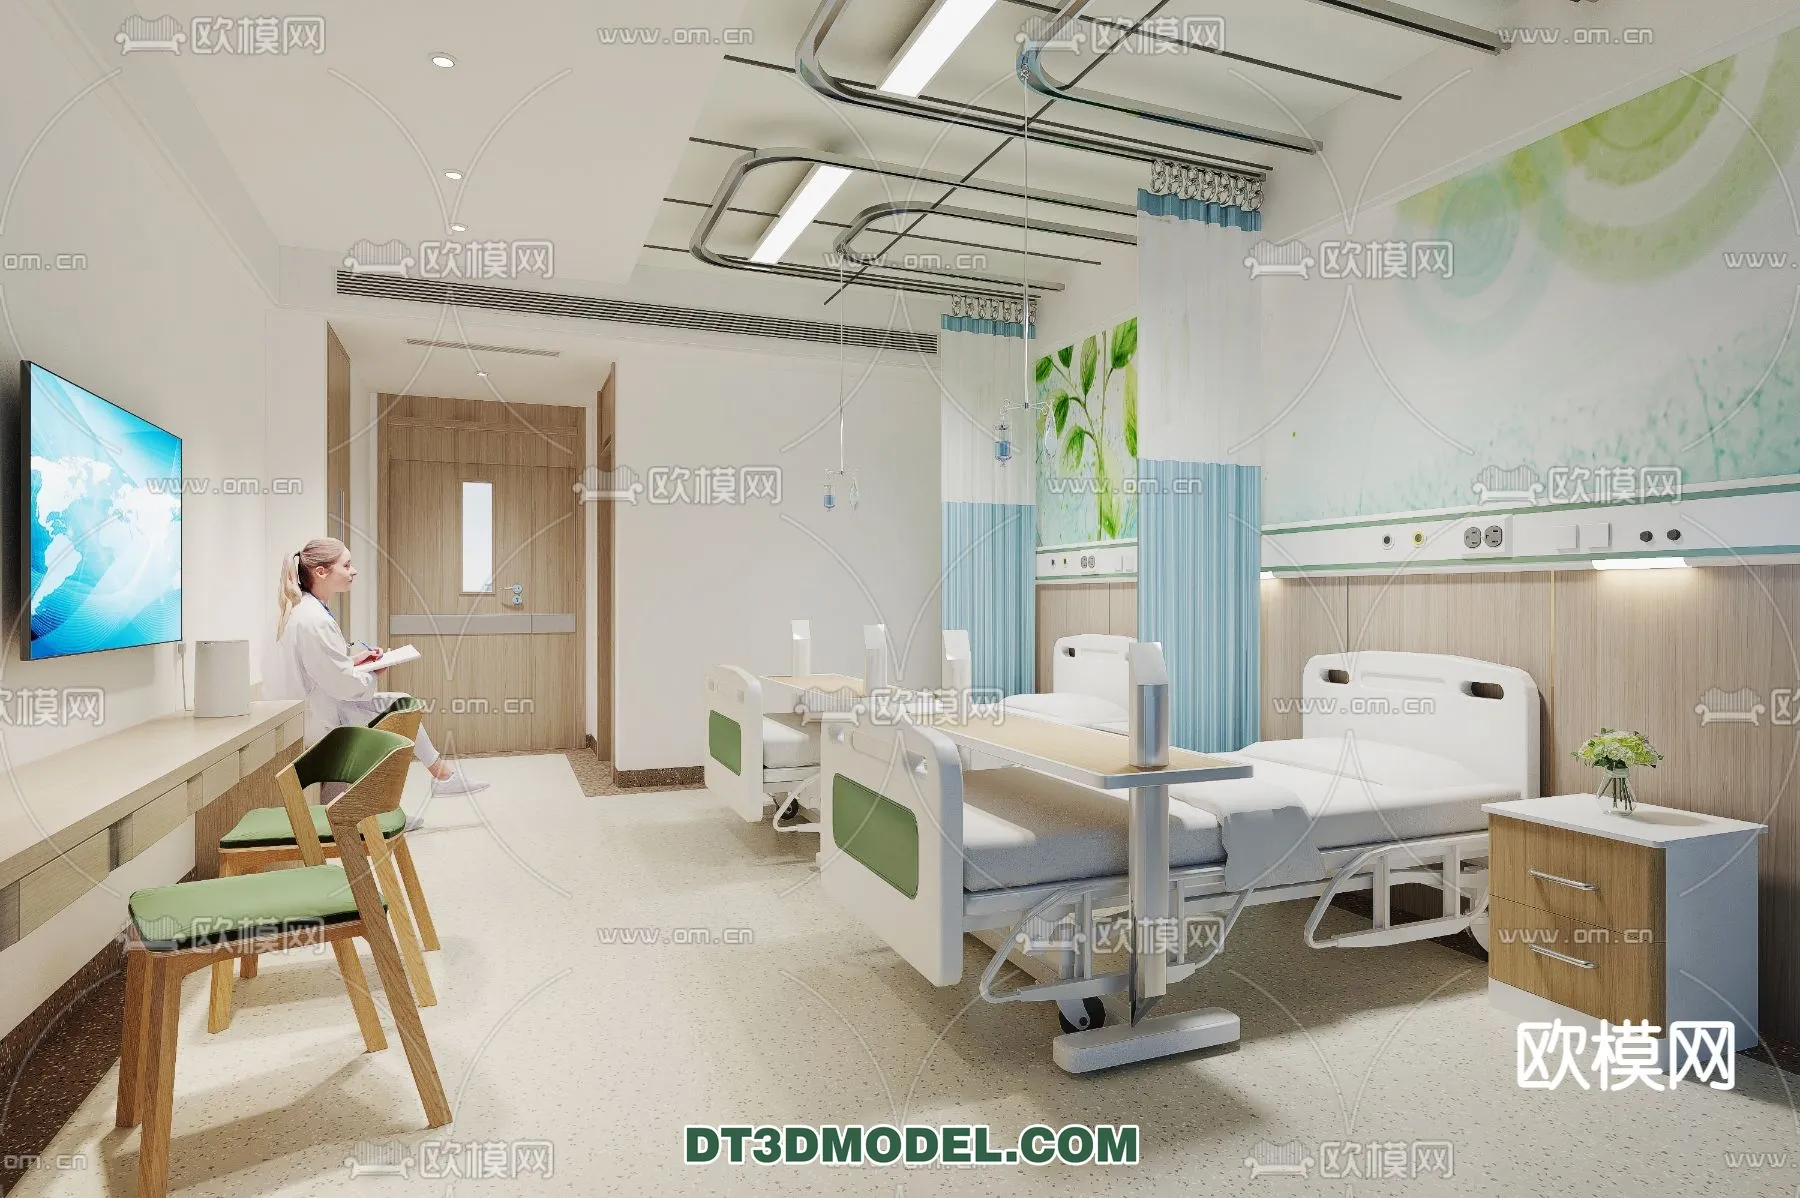 HOSPITAL 3D SCENES – MODERN – 0066